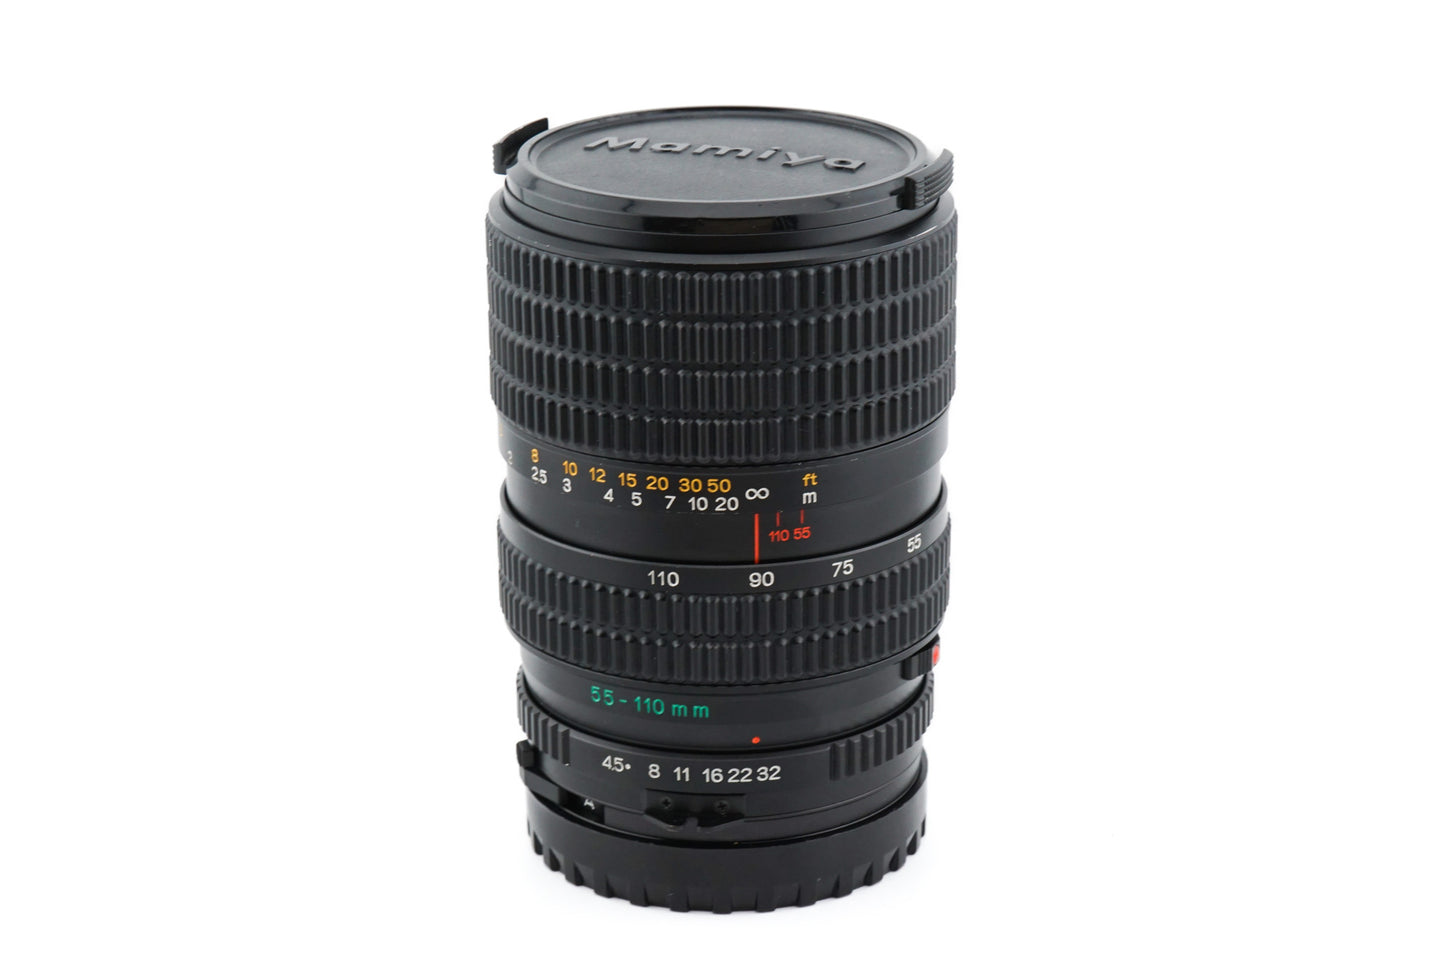 Mamiya 55-110mm f4.5 Mamiya-Sekor Zoom C N - Lens